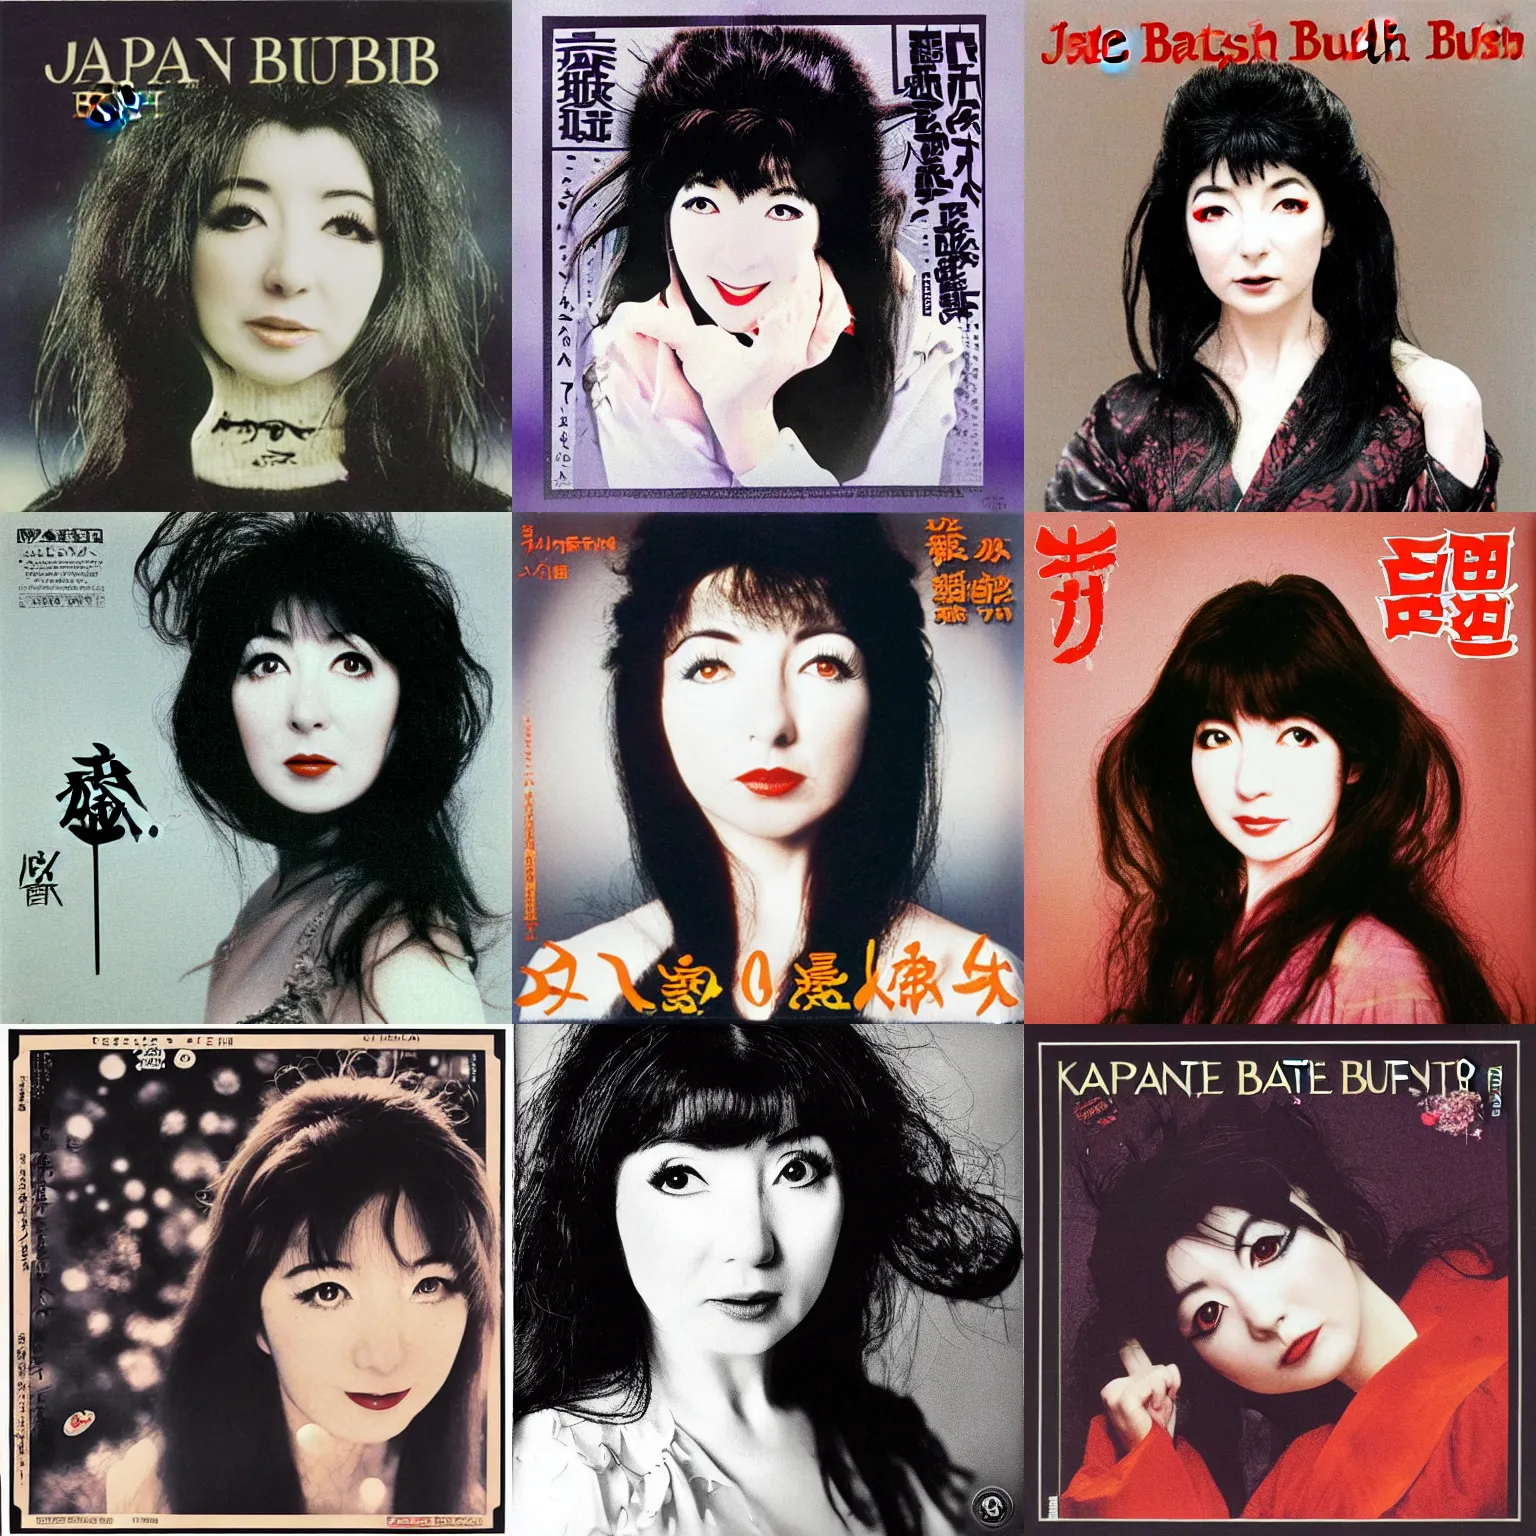 Prompt: japanese kate bush, album cover